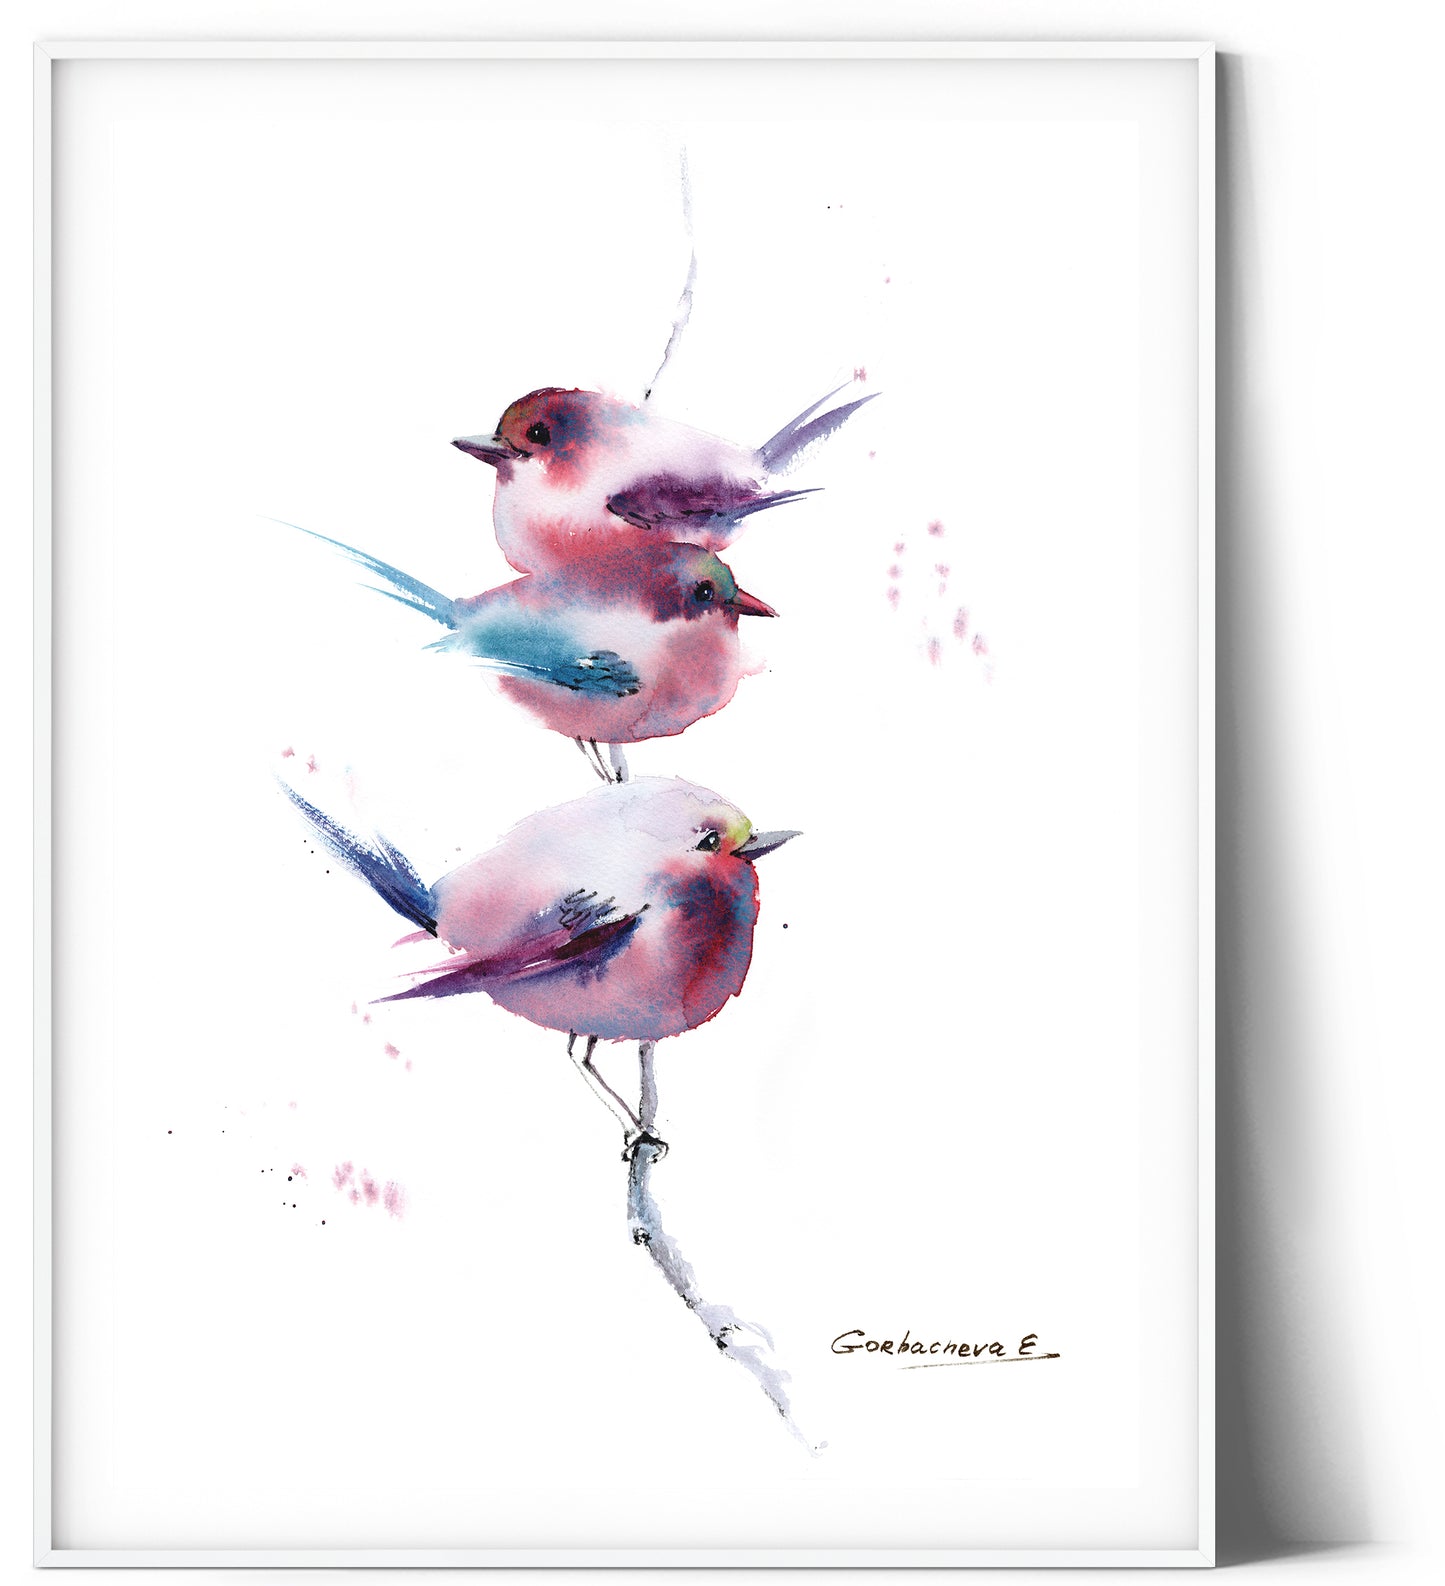 Floral Bird Prints Set of 3 in Pink Purple Pastel Tones for Bedroom Wall Decor, Nursery Gallery Wall Prints, Paintings